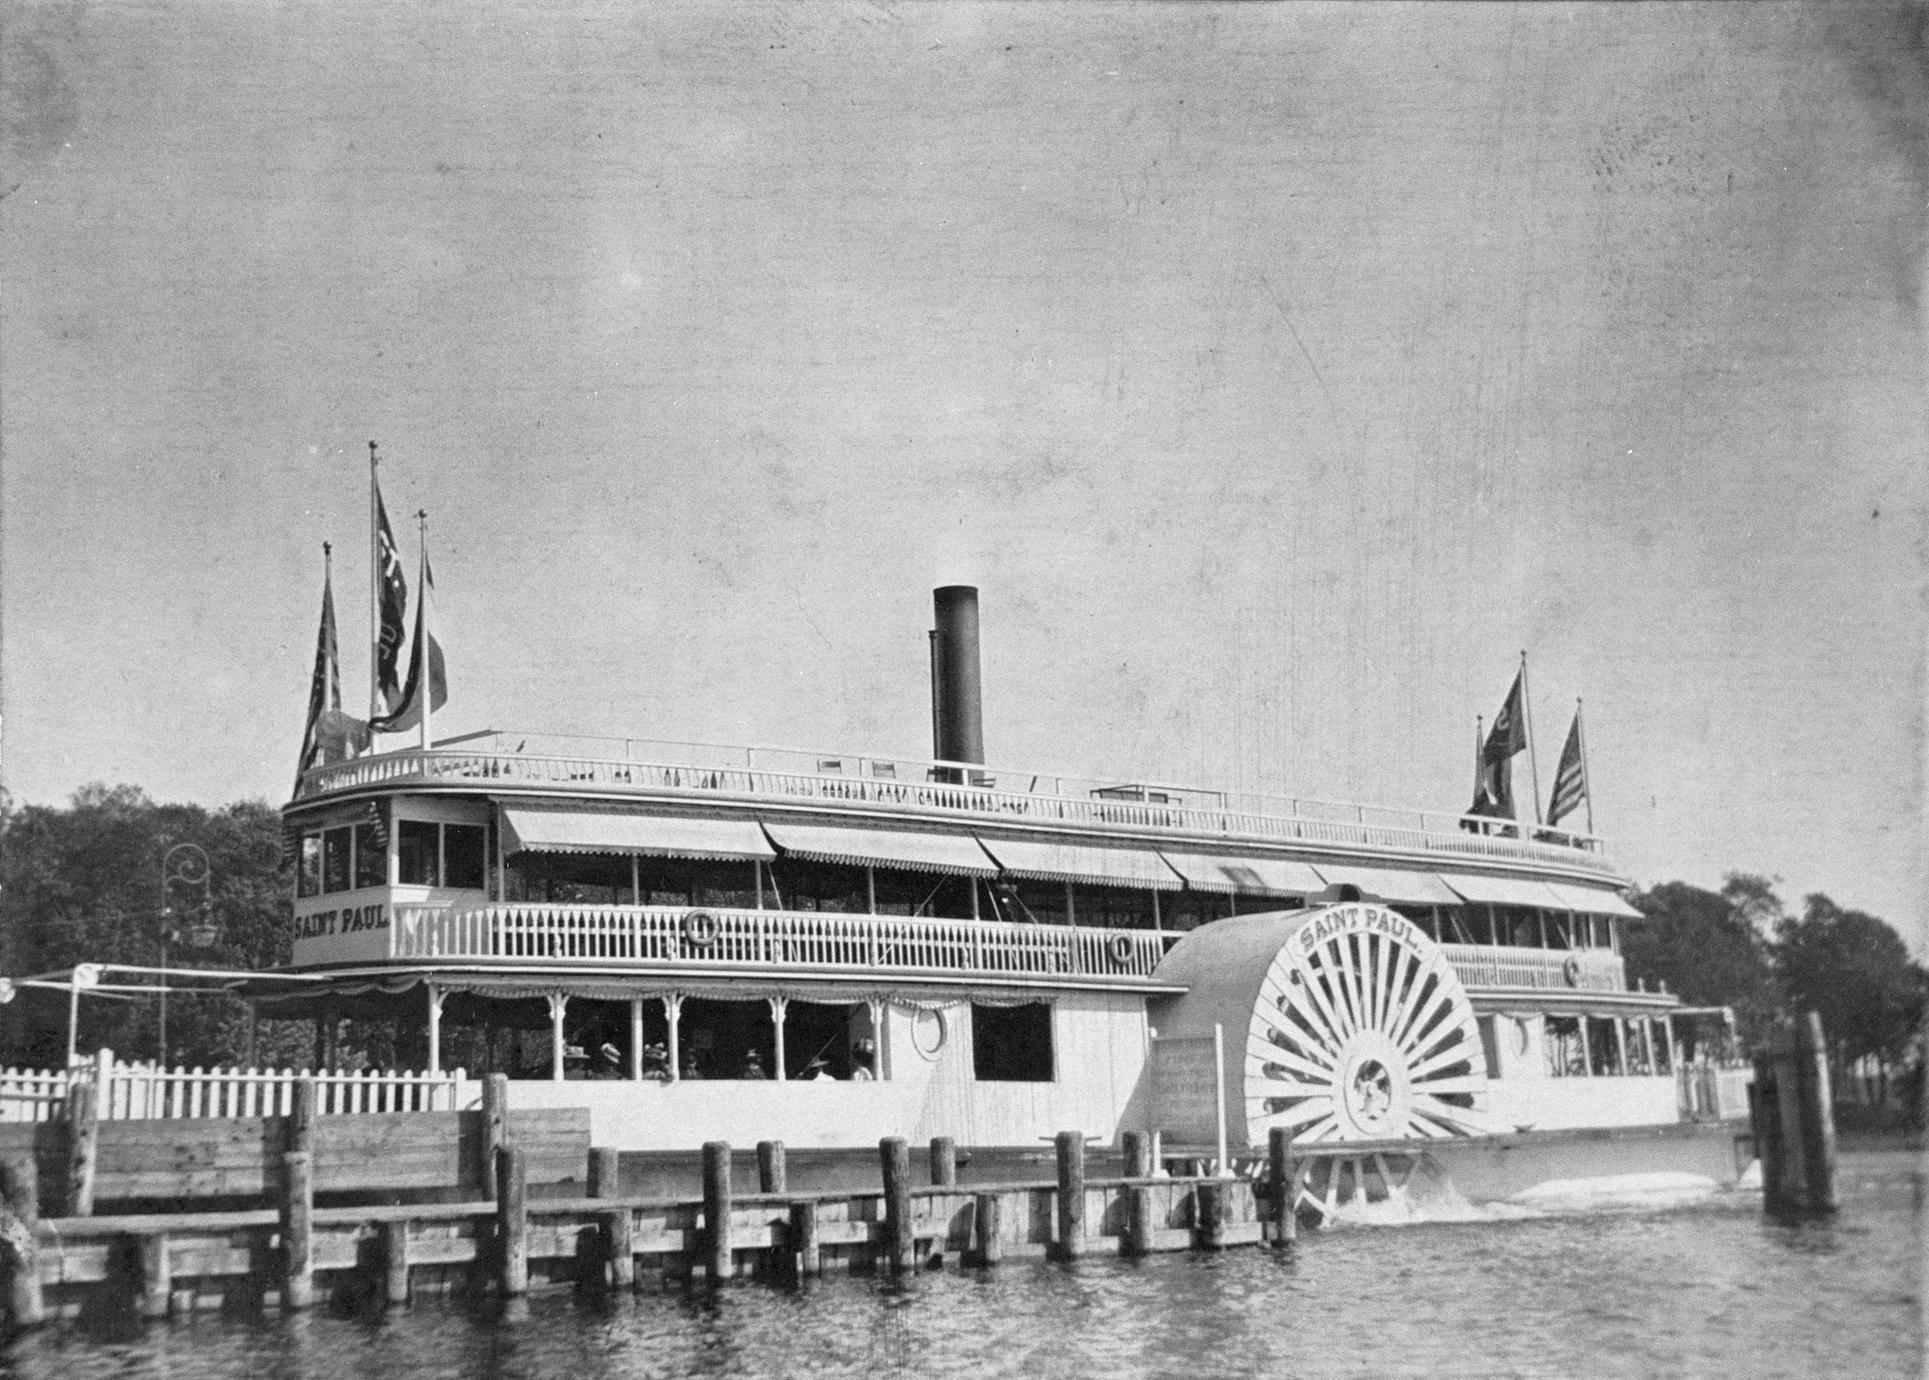 Saint Paul (Excursion boat, circa 1910)